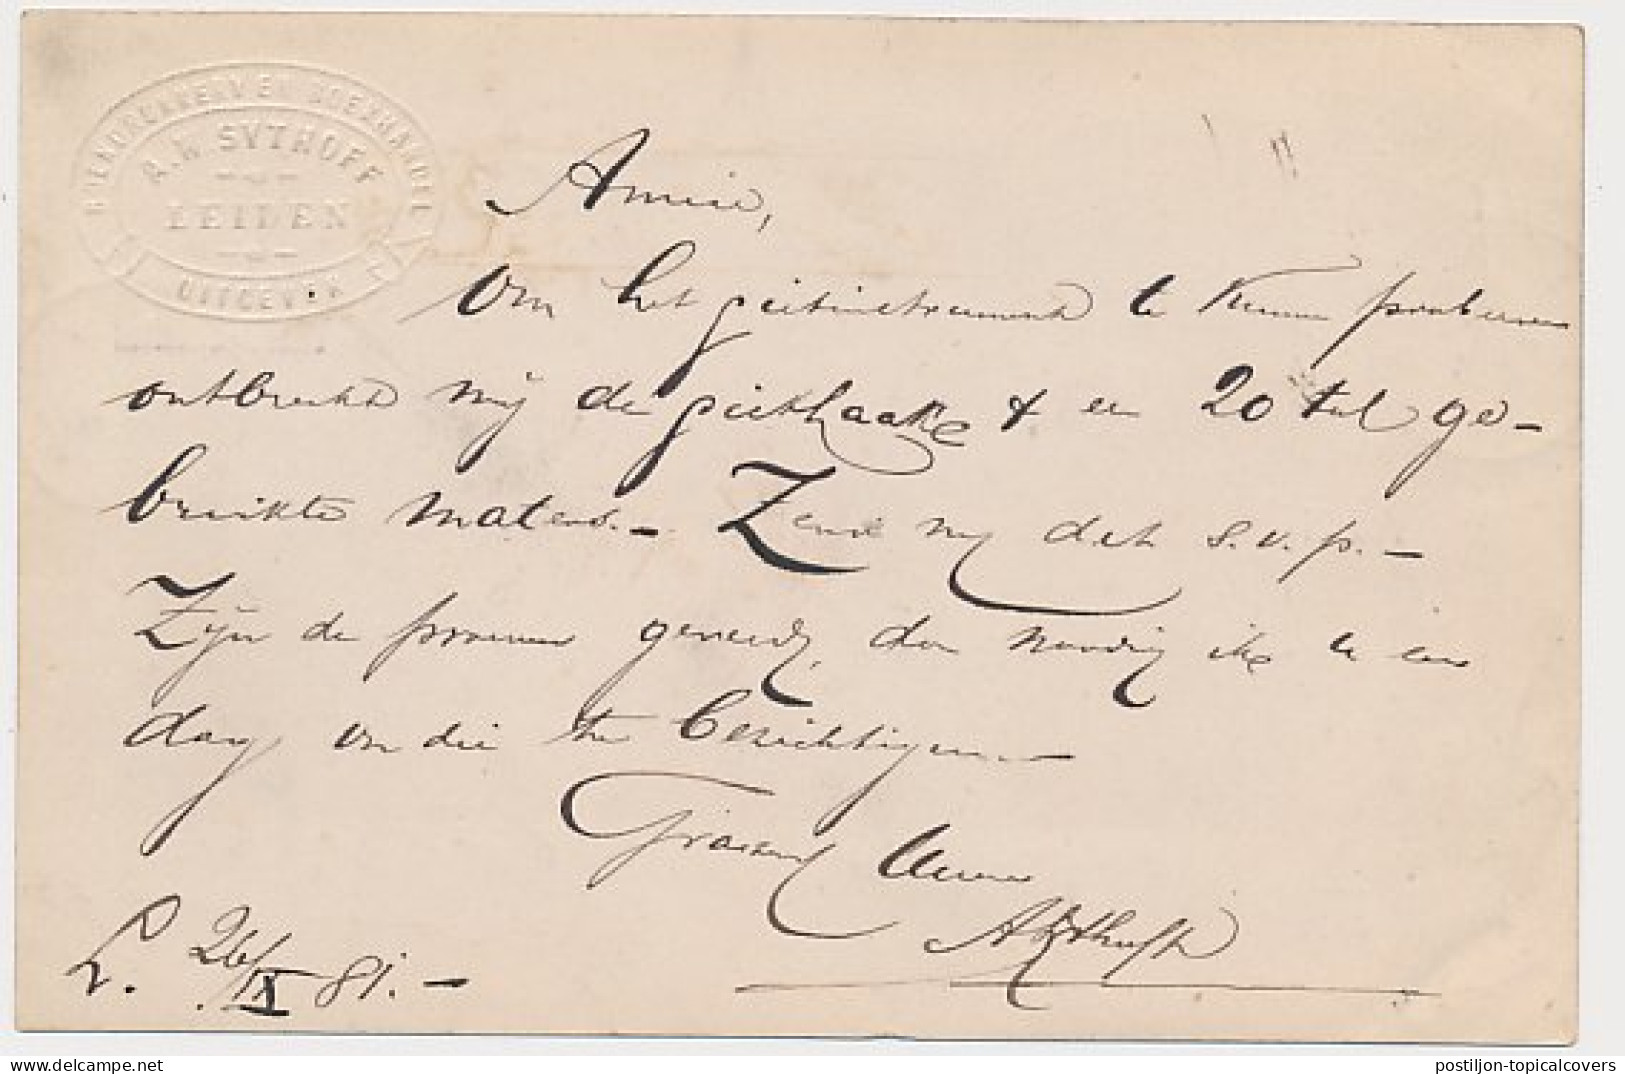 Briefkaart G. 23 Firma Blinddruk Leiden 1881 - Entiers Postaux